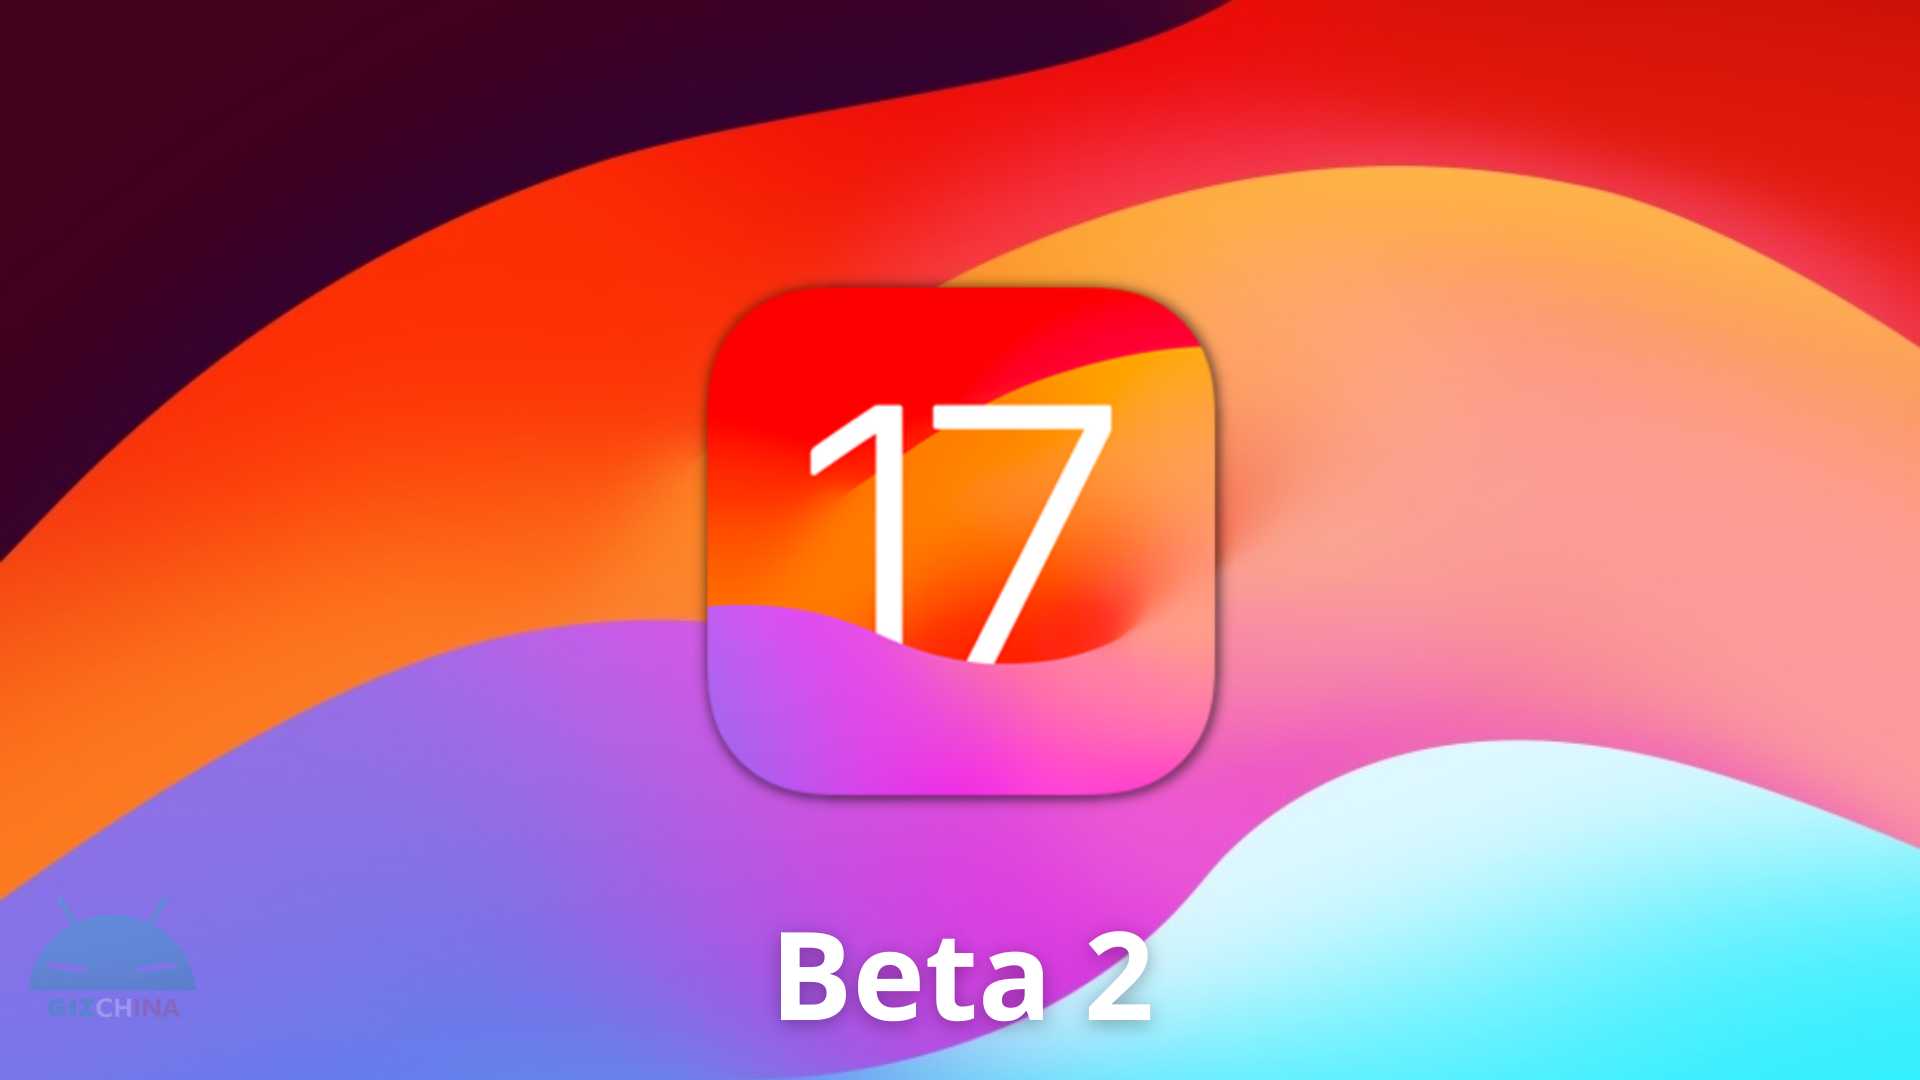 Apple เผยแพร่ Ios 17 Beta 2 ข่าวทั้งหมด Gizchinait